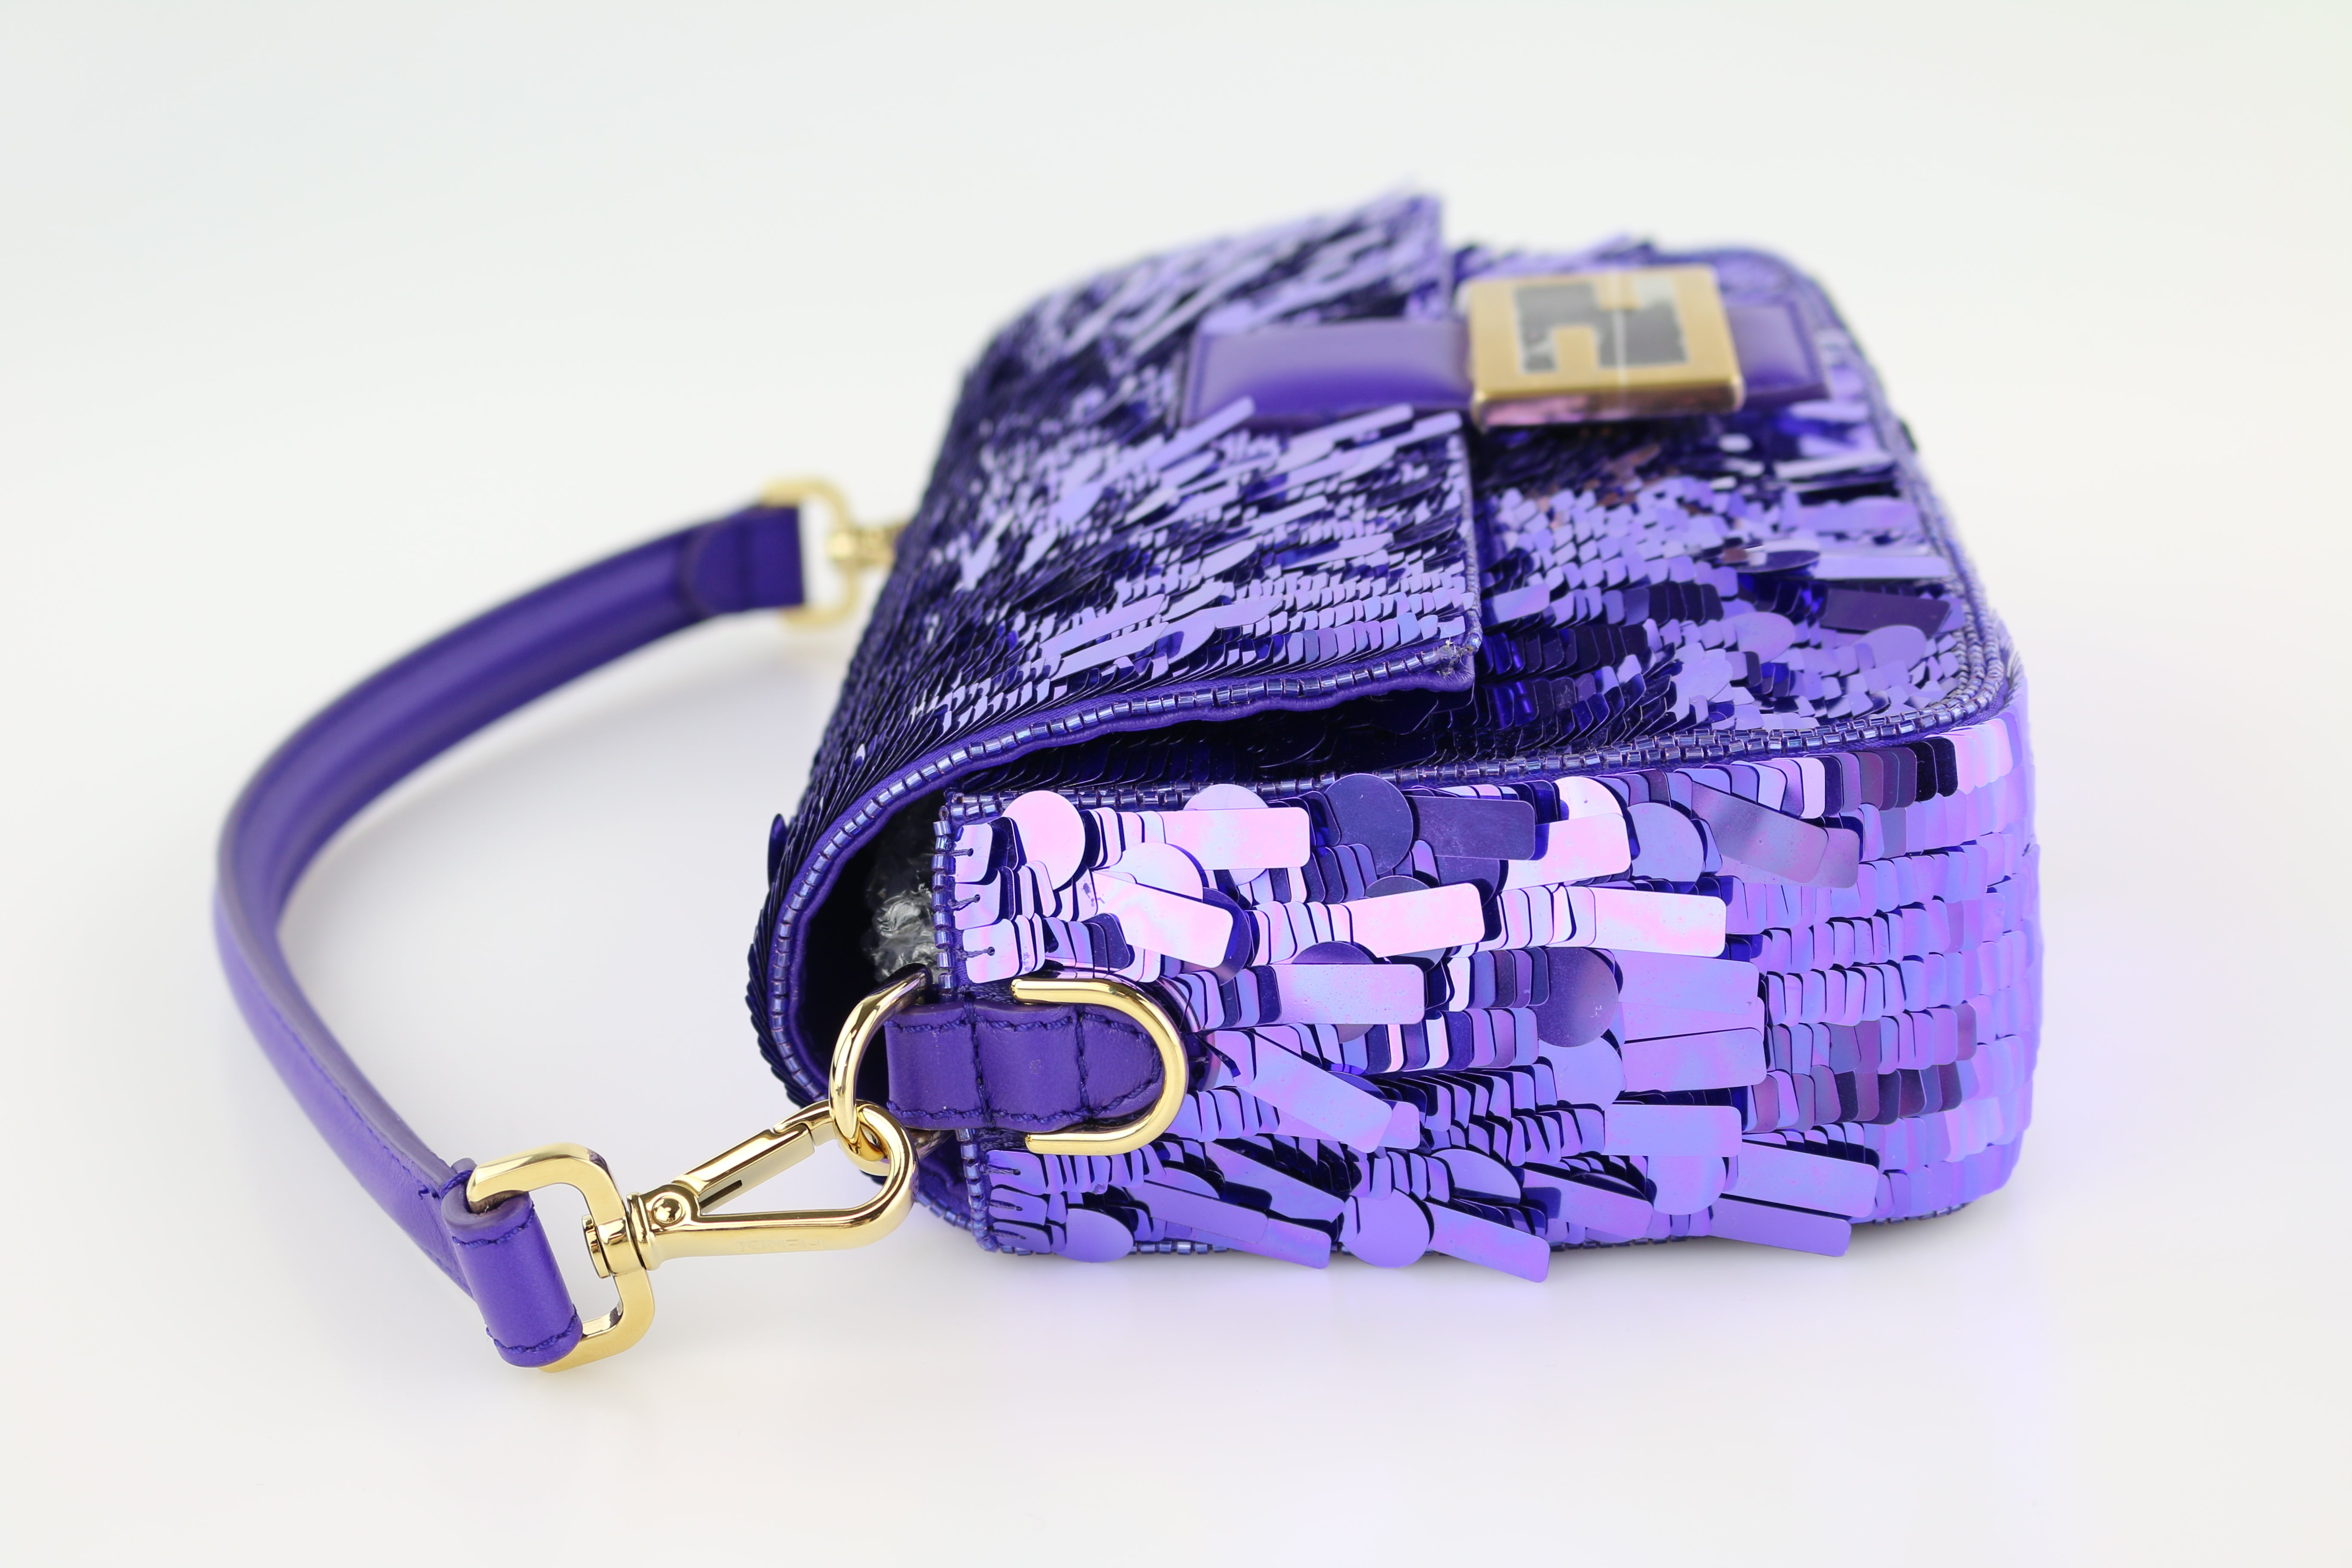 Baguette - Purple sequined bag